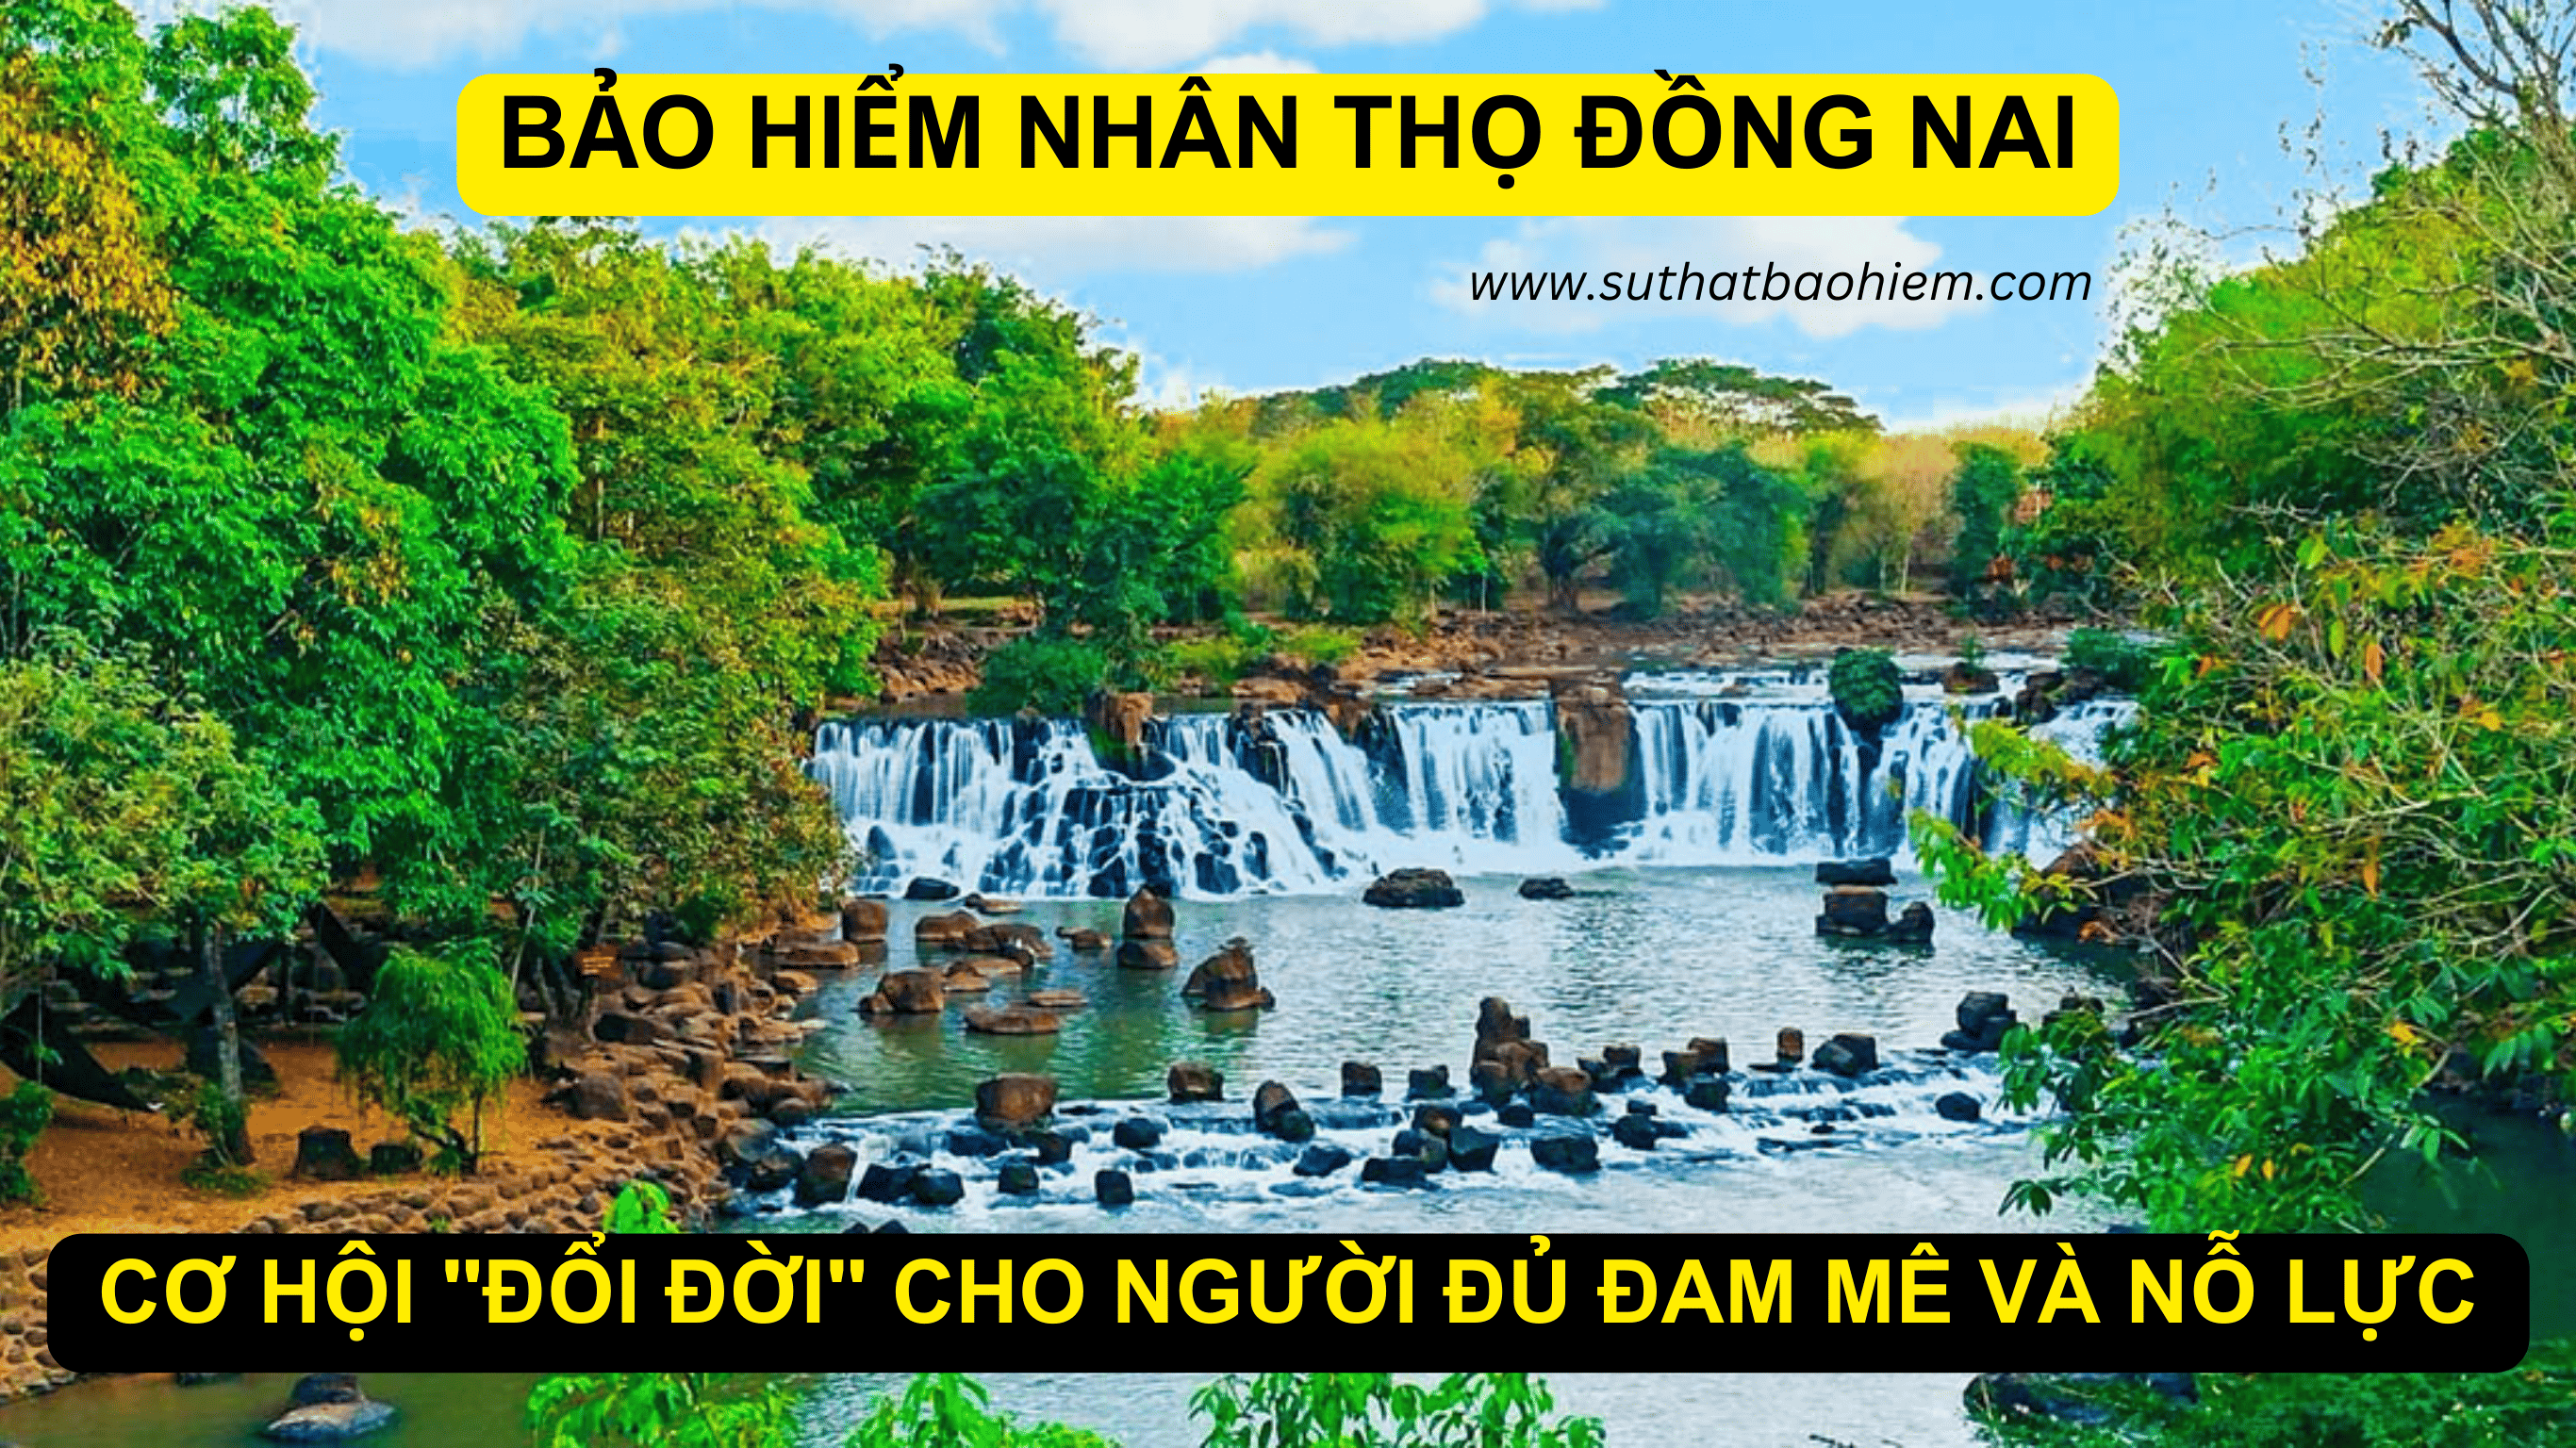 BAO HIEM NHAN THO HAI PHONG 15